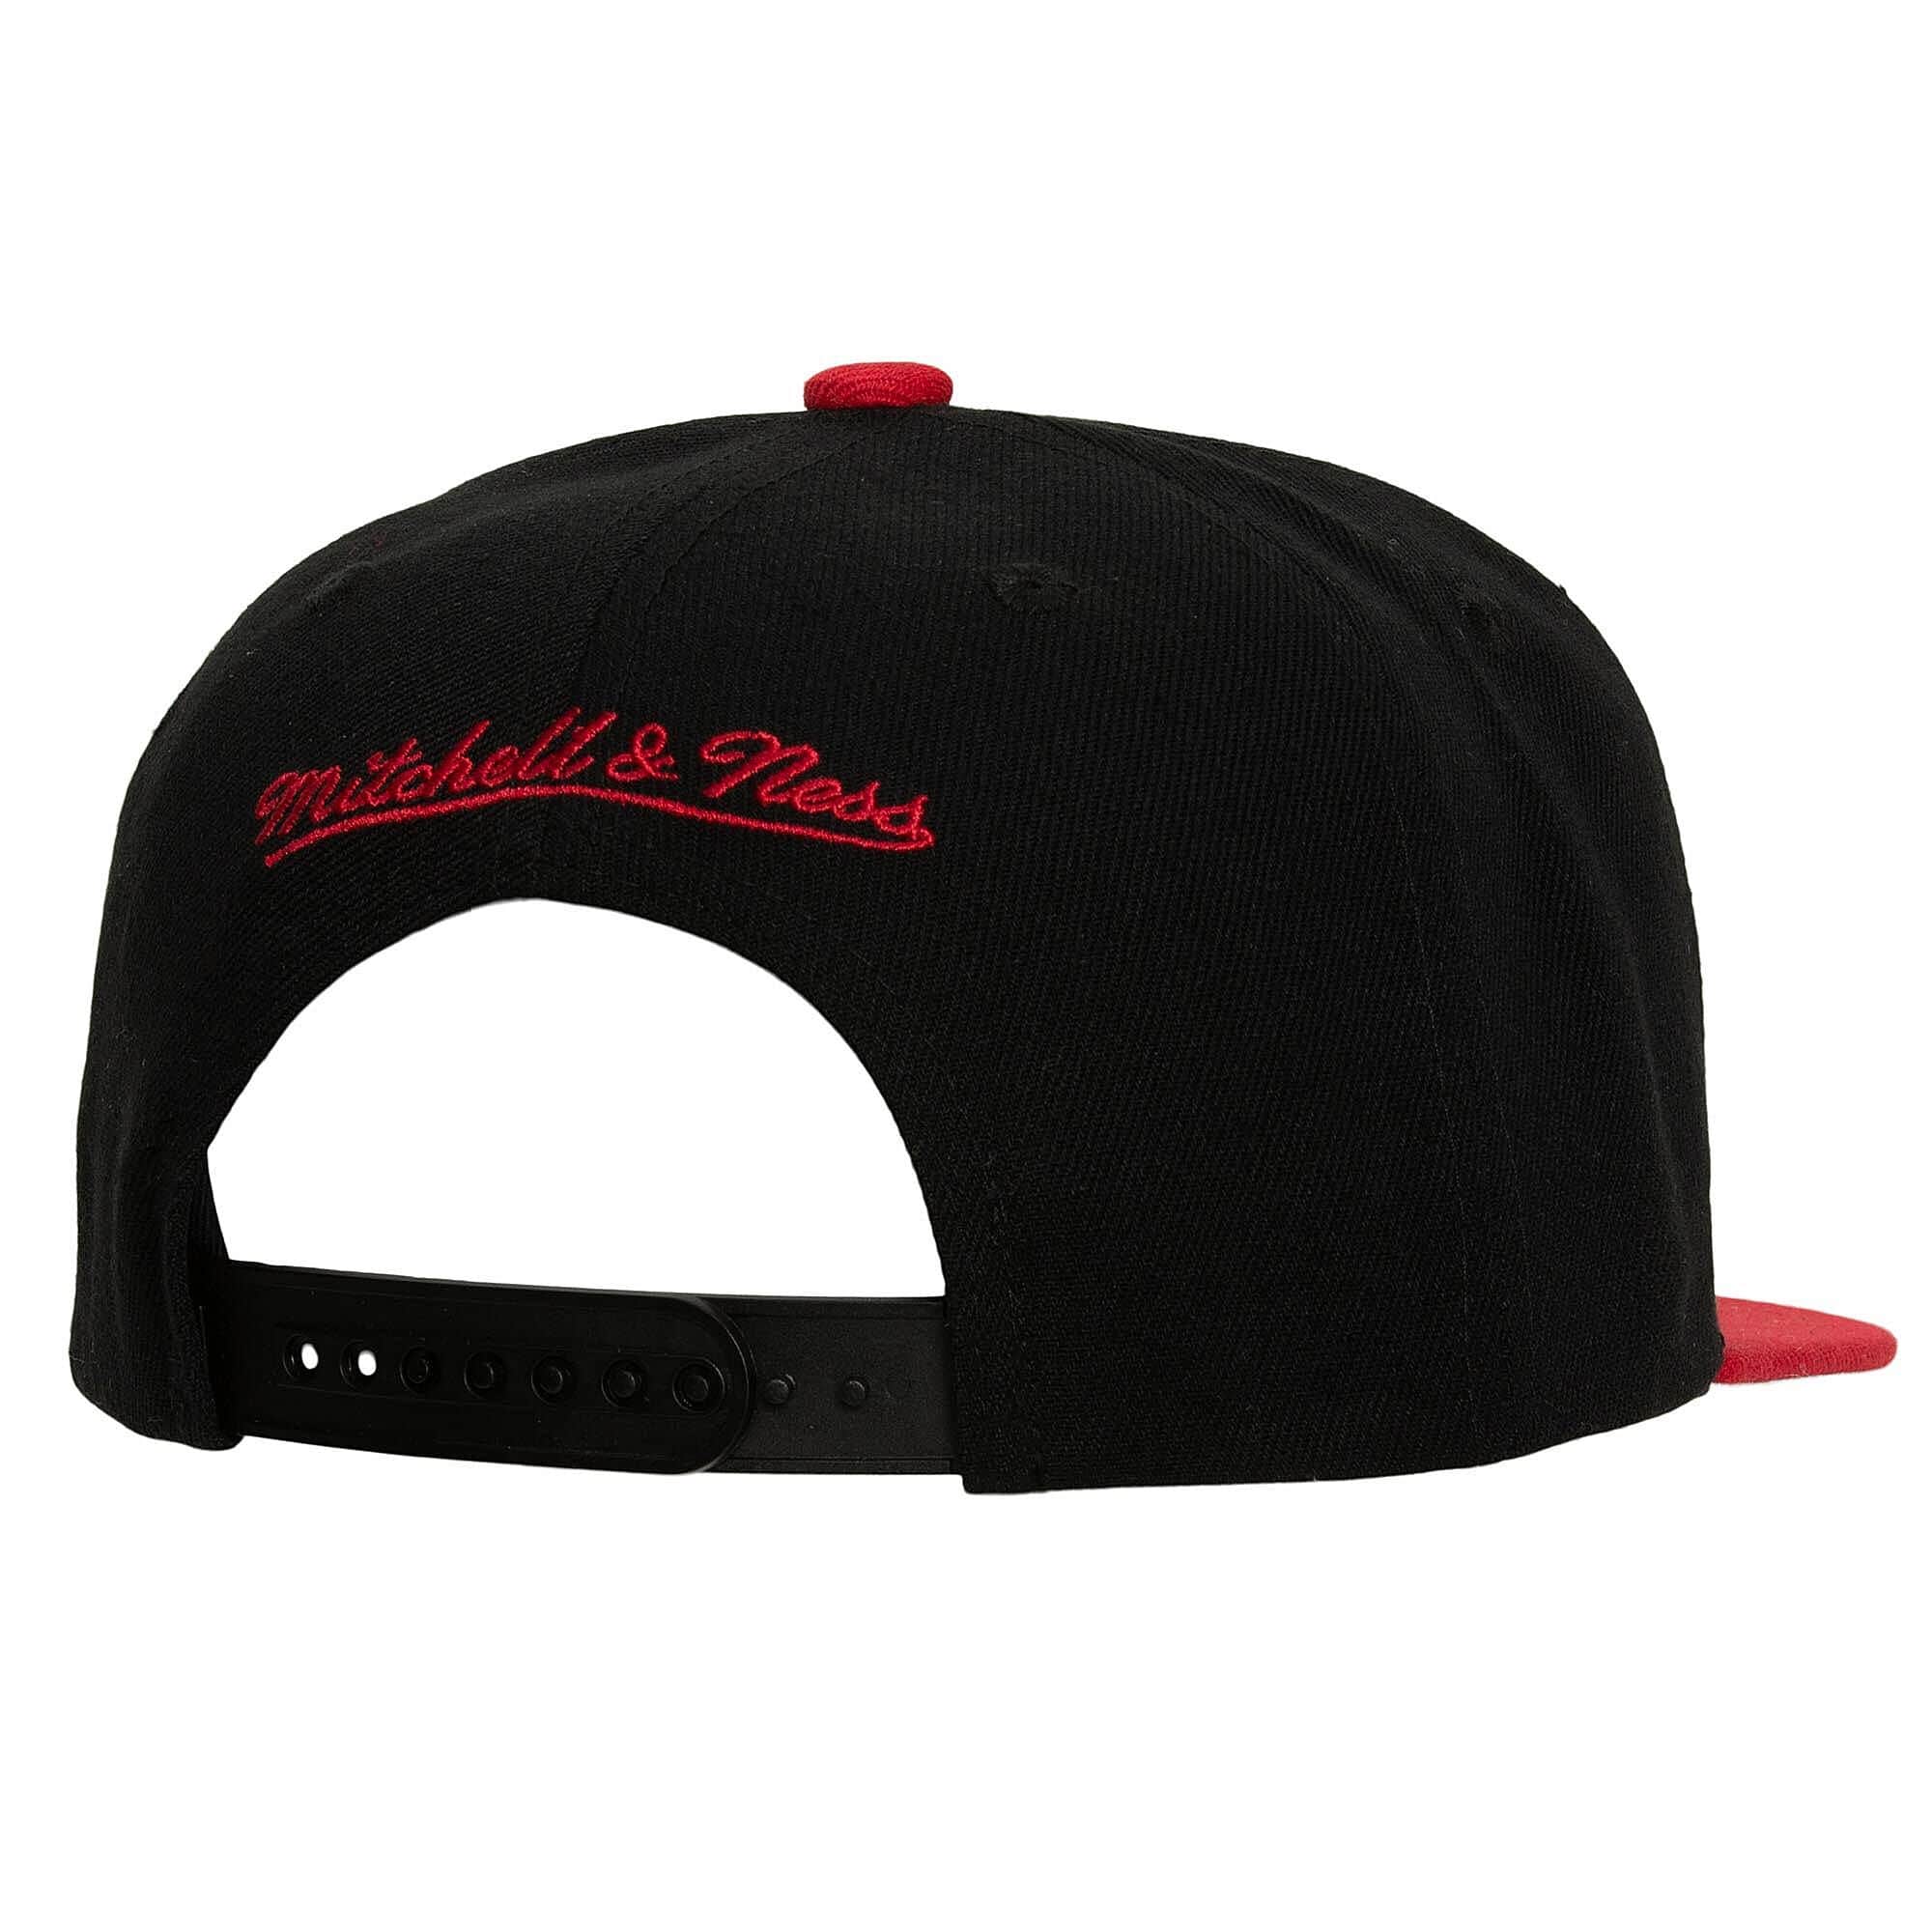 Mitchell & Ness NBA Black/White Chicago Bulls "The Finals" snapback  Hat Cap New